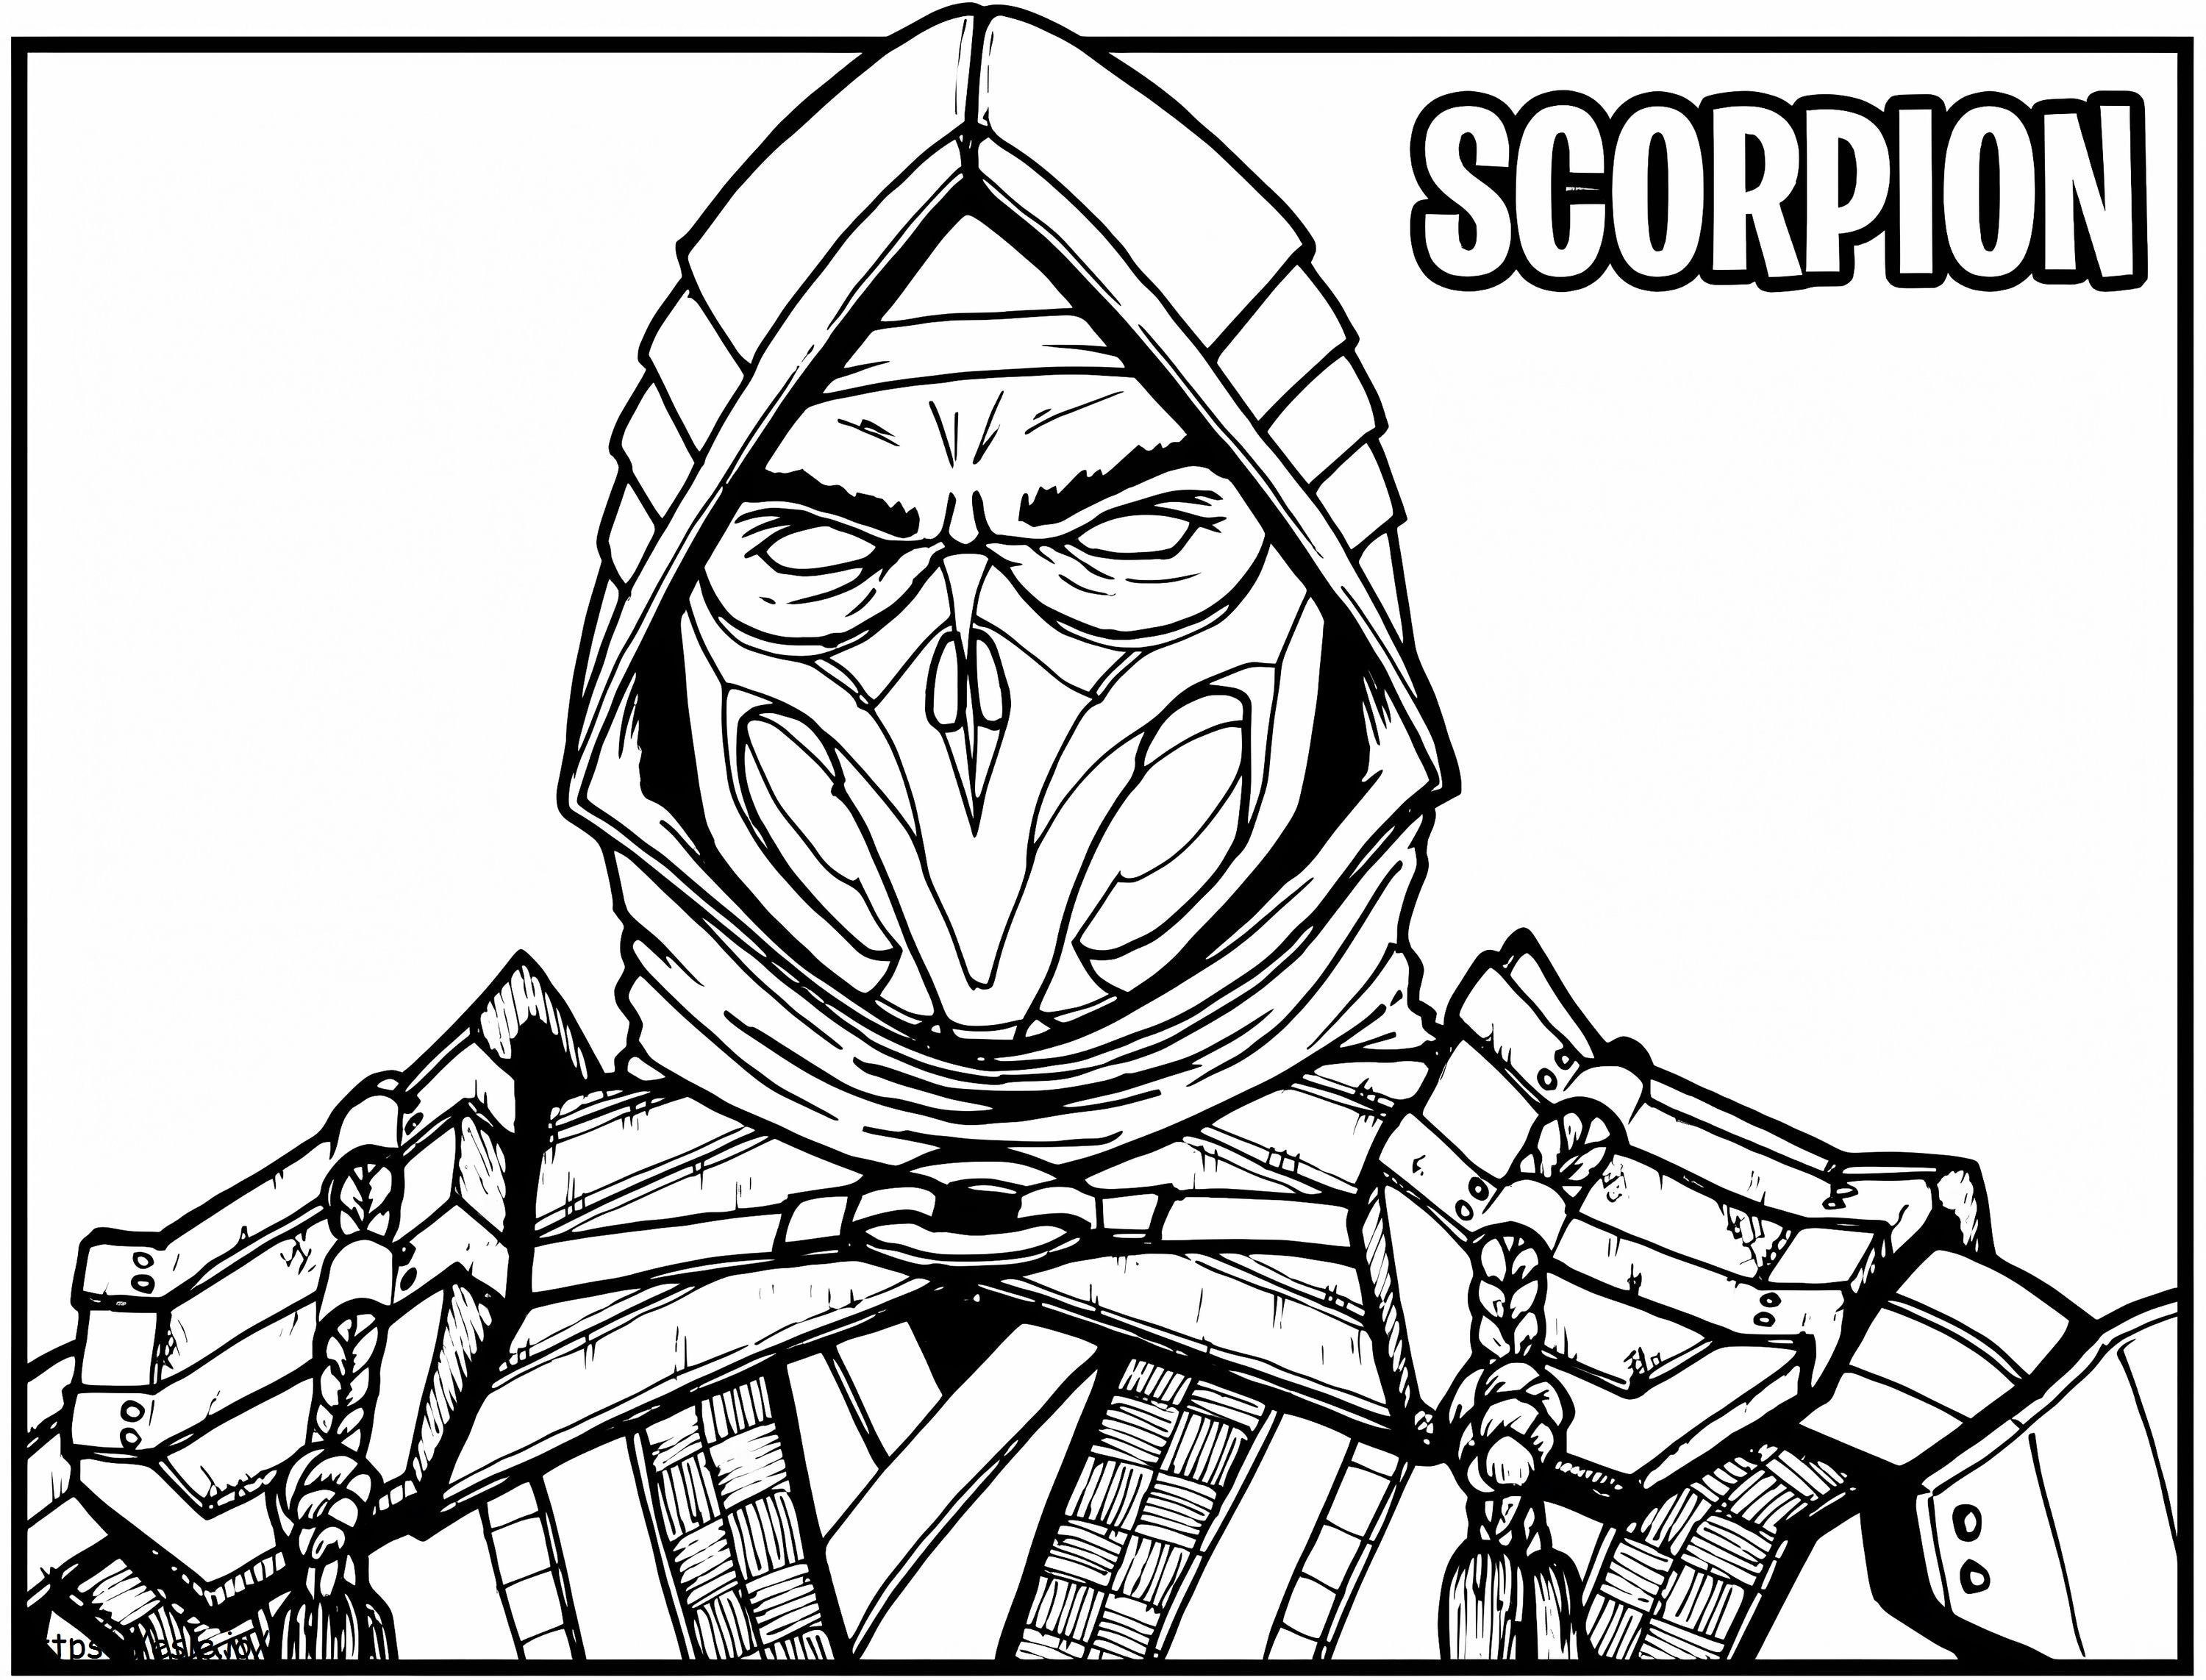 Scorpion Mortal Kombat 4 ausmalbilder